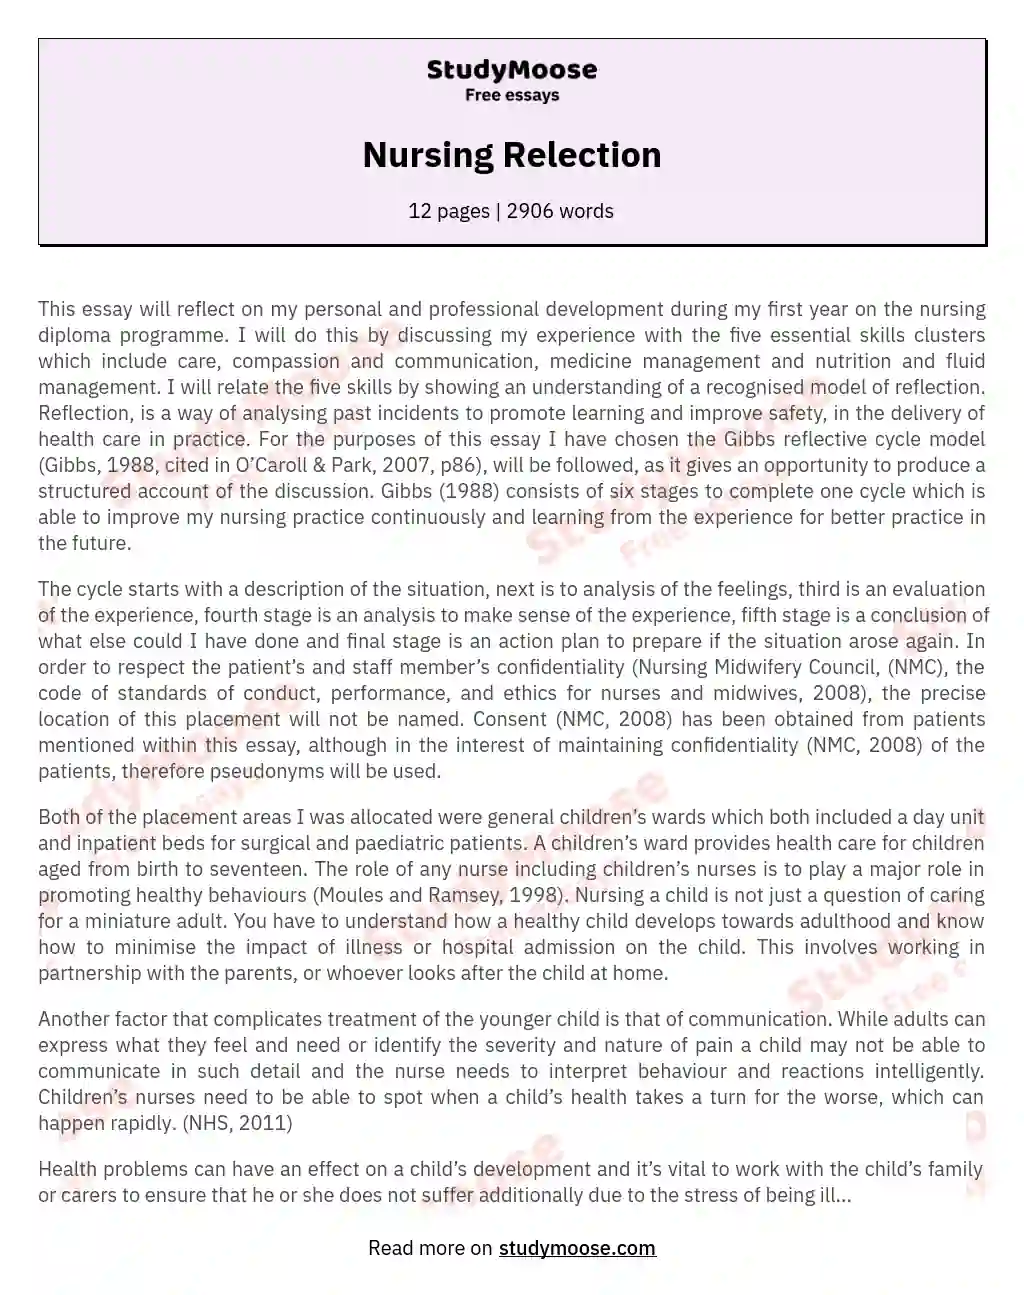 Nursing Relection essay